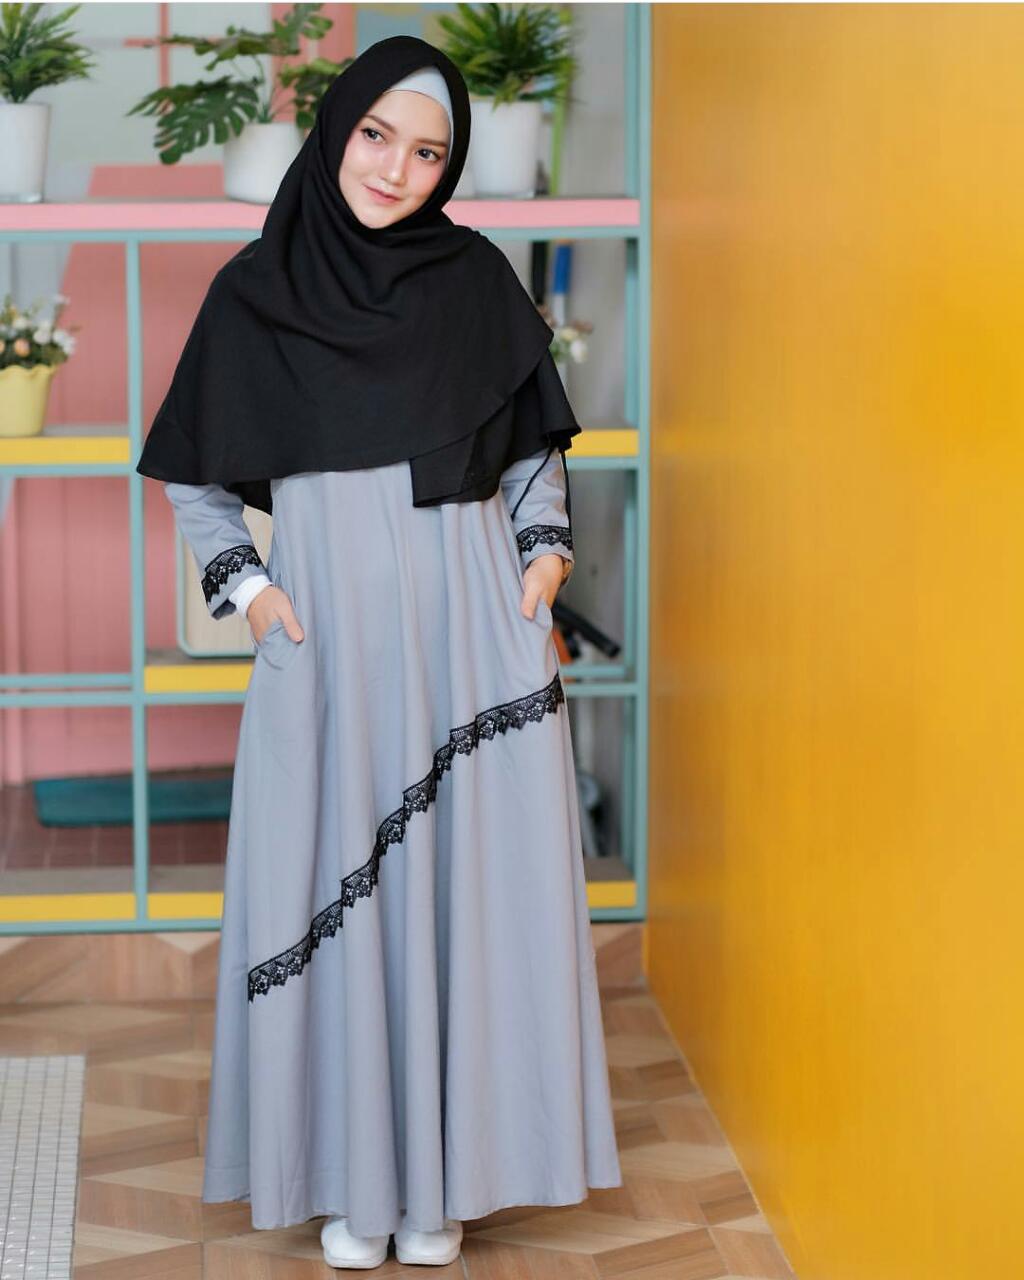 Baju Muslim Modern Gamis SYARFIA SYARI Moscrepe Mix Renda (Free Hijab / Khimar ) Terusan Wanita Lengan Panjang Trendy Modern Baju  Stelan Syar’i Polos Muslim Gaun Dress Pesta Murah Terbaru Pakaian Modis Simple Syari Couple Set Jumbo Casual Elegant 2019